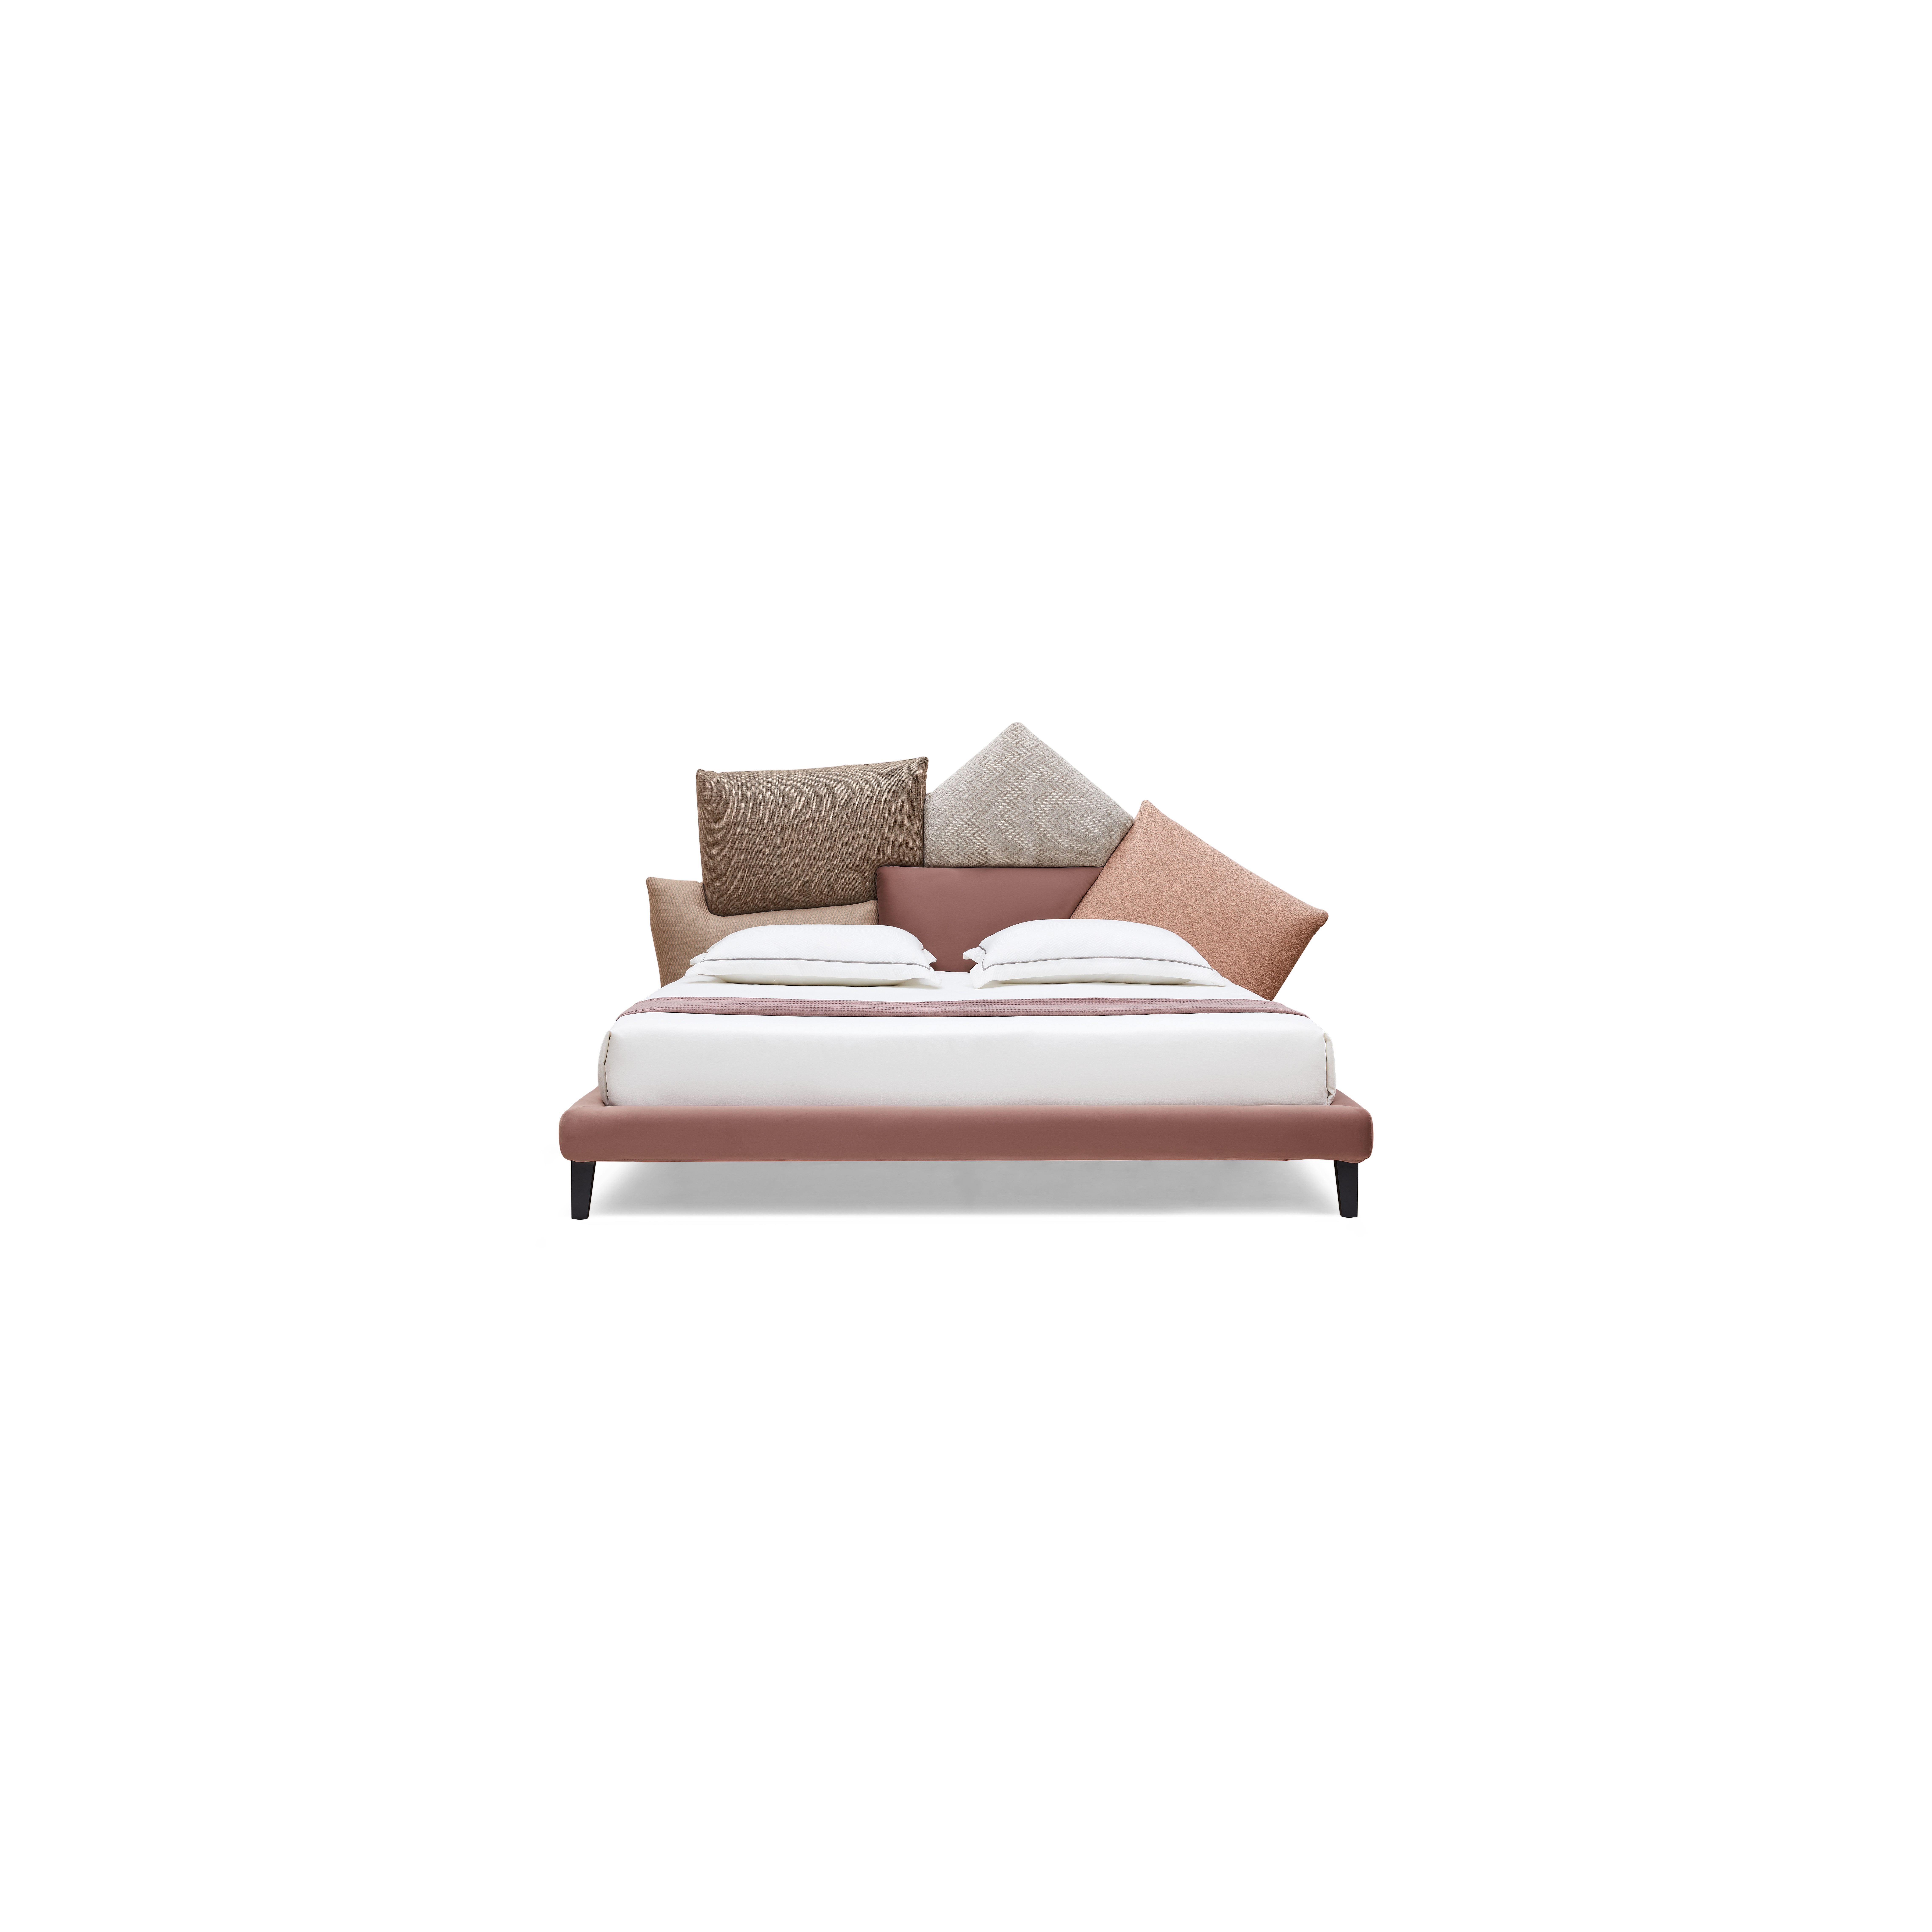 Beauty design top layer genuine leather beds wholesale bedroom furniture Light luxury European design